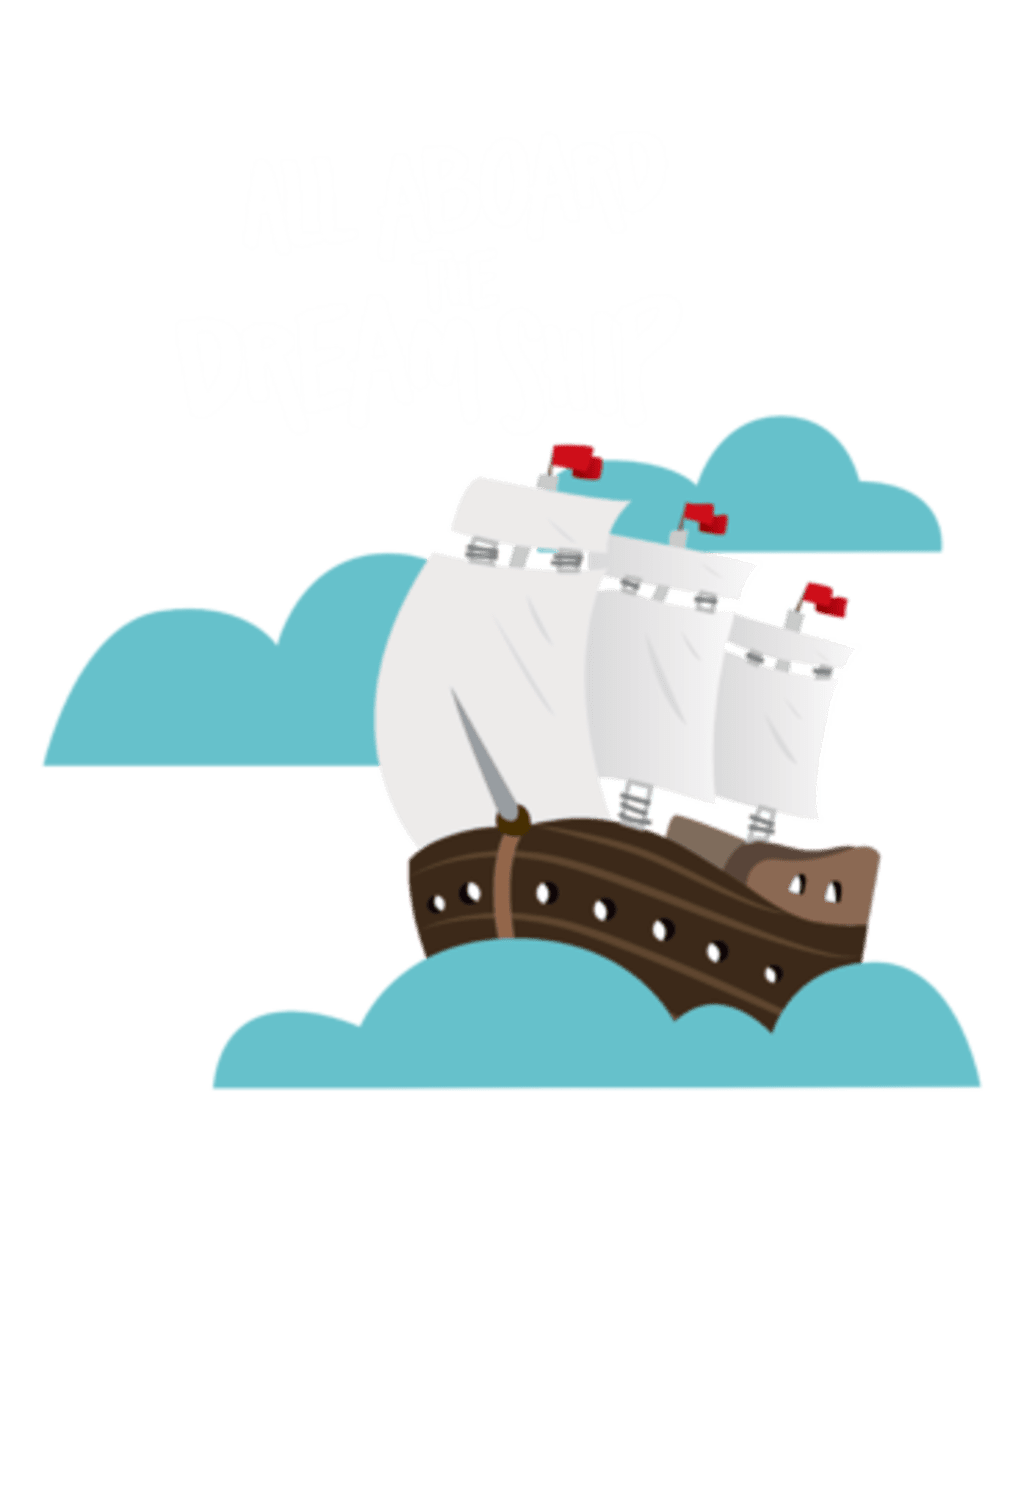 The dream ship